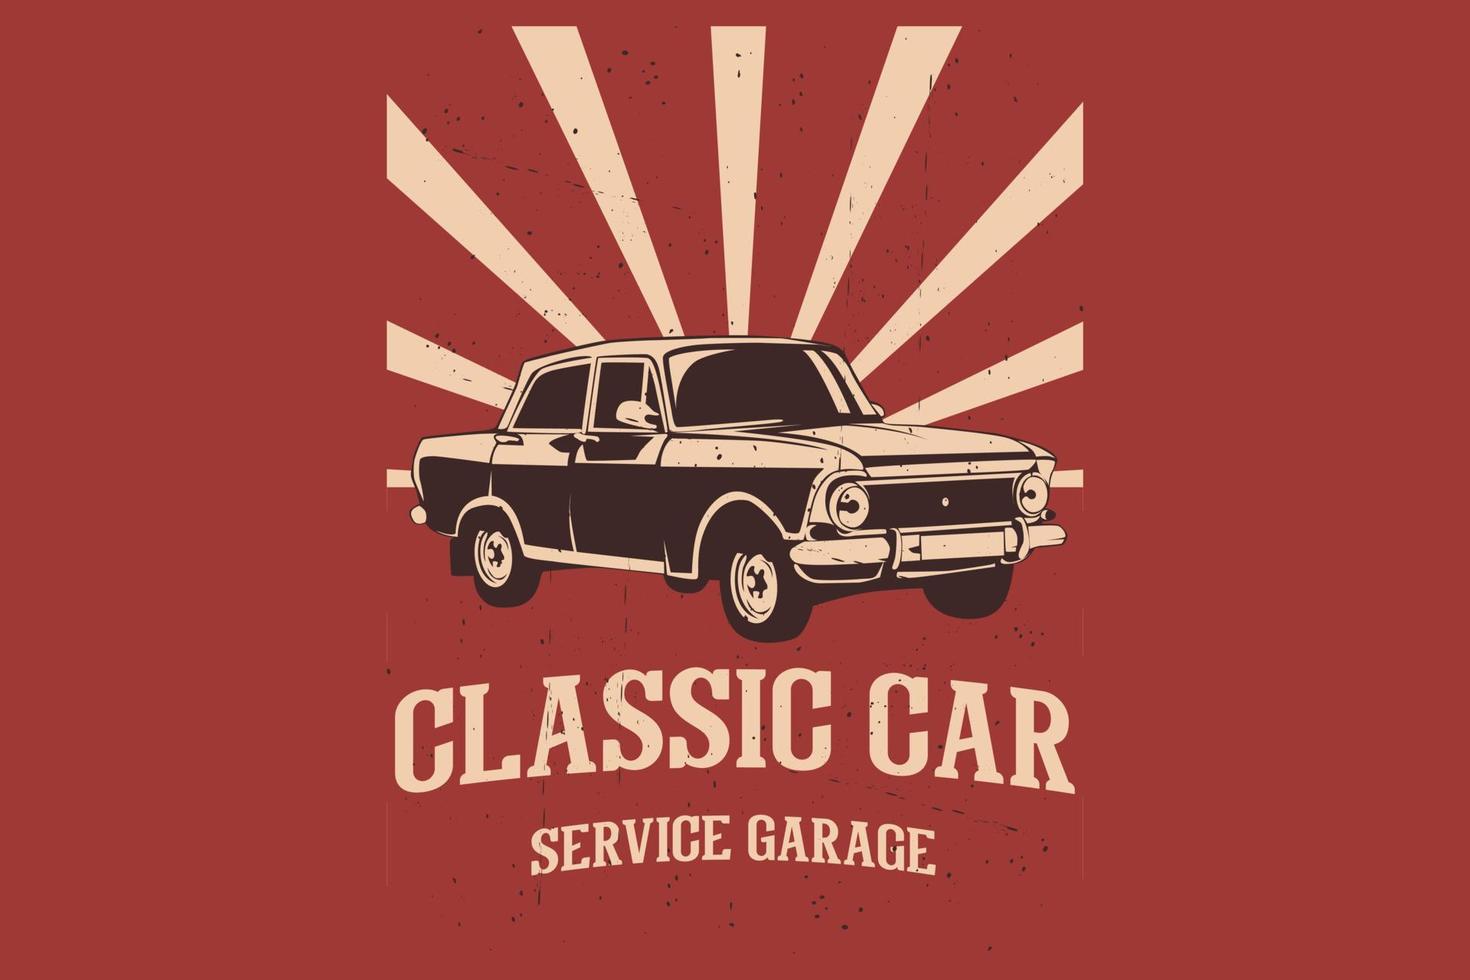 Classic car service garage silhouette design vector